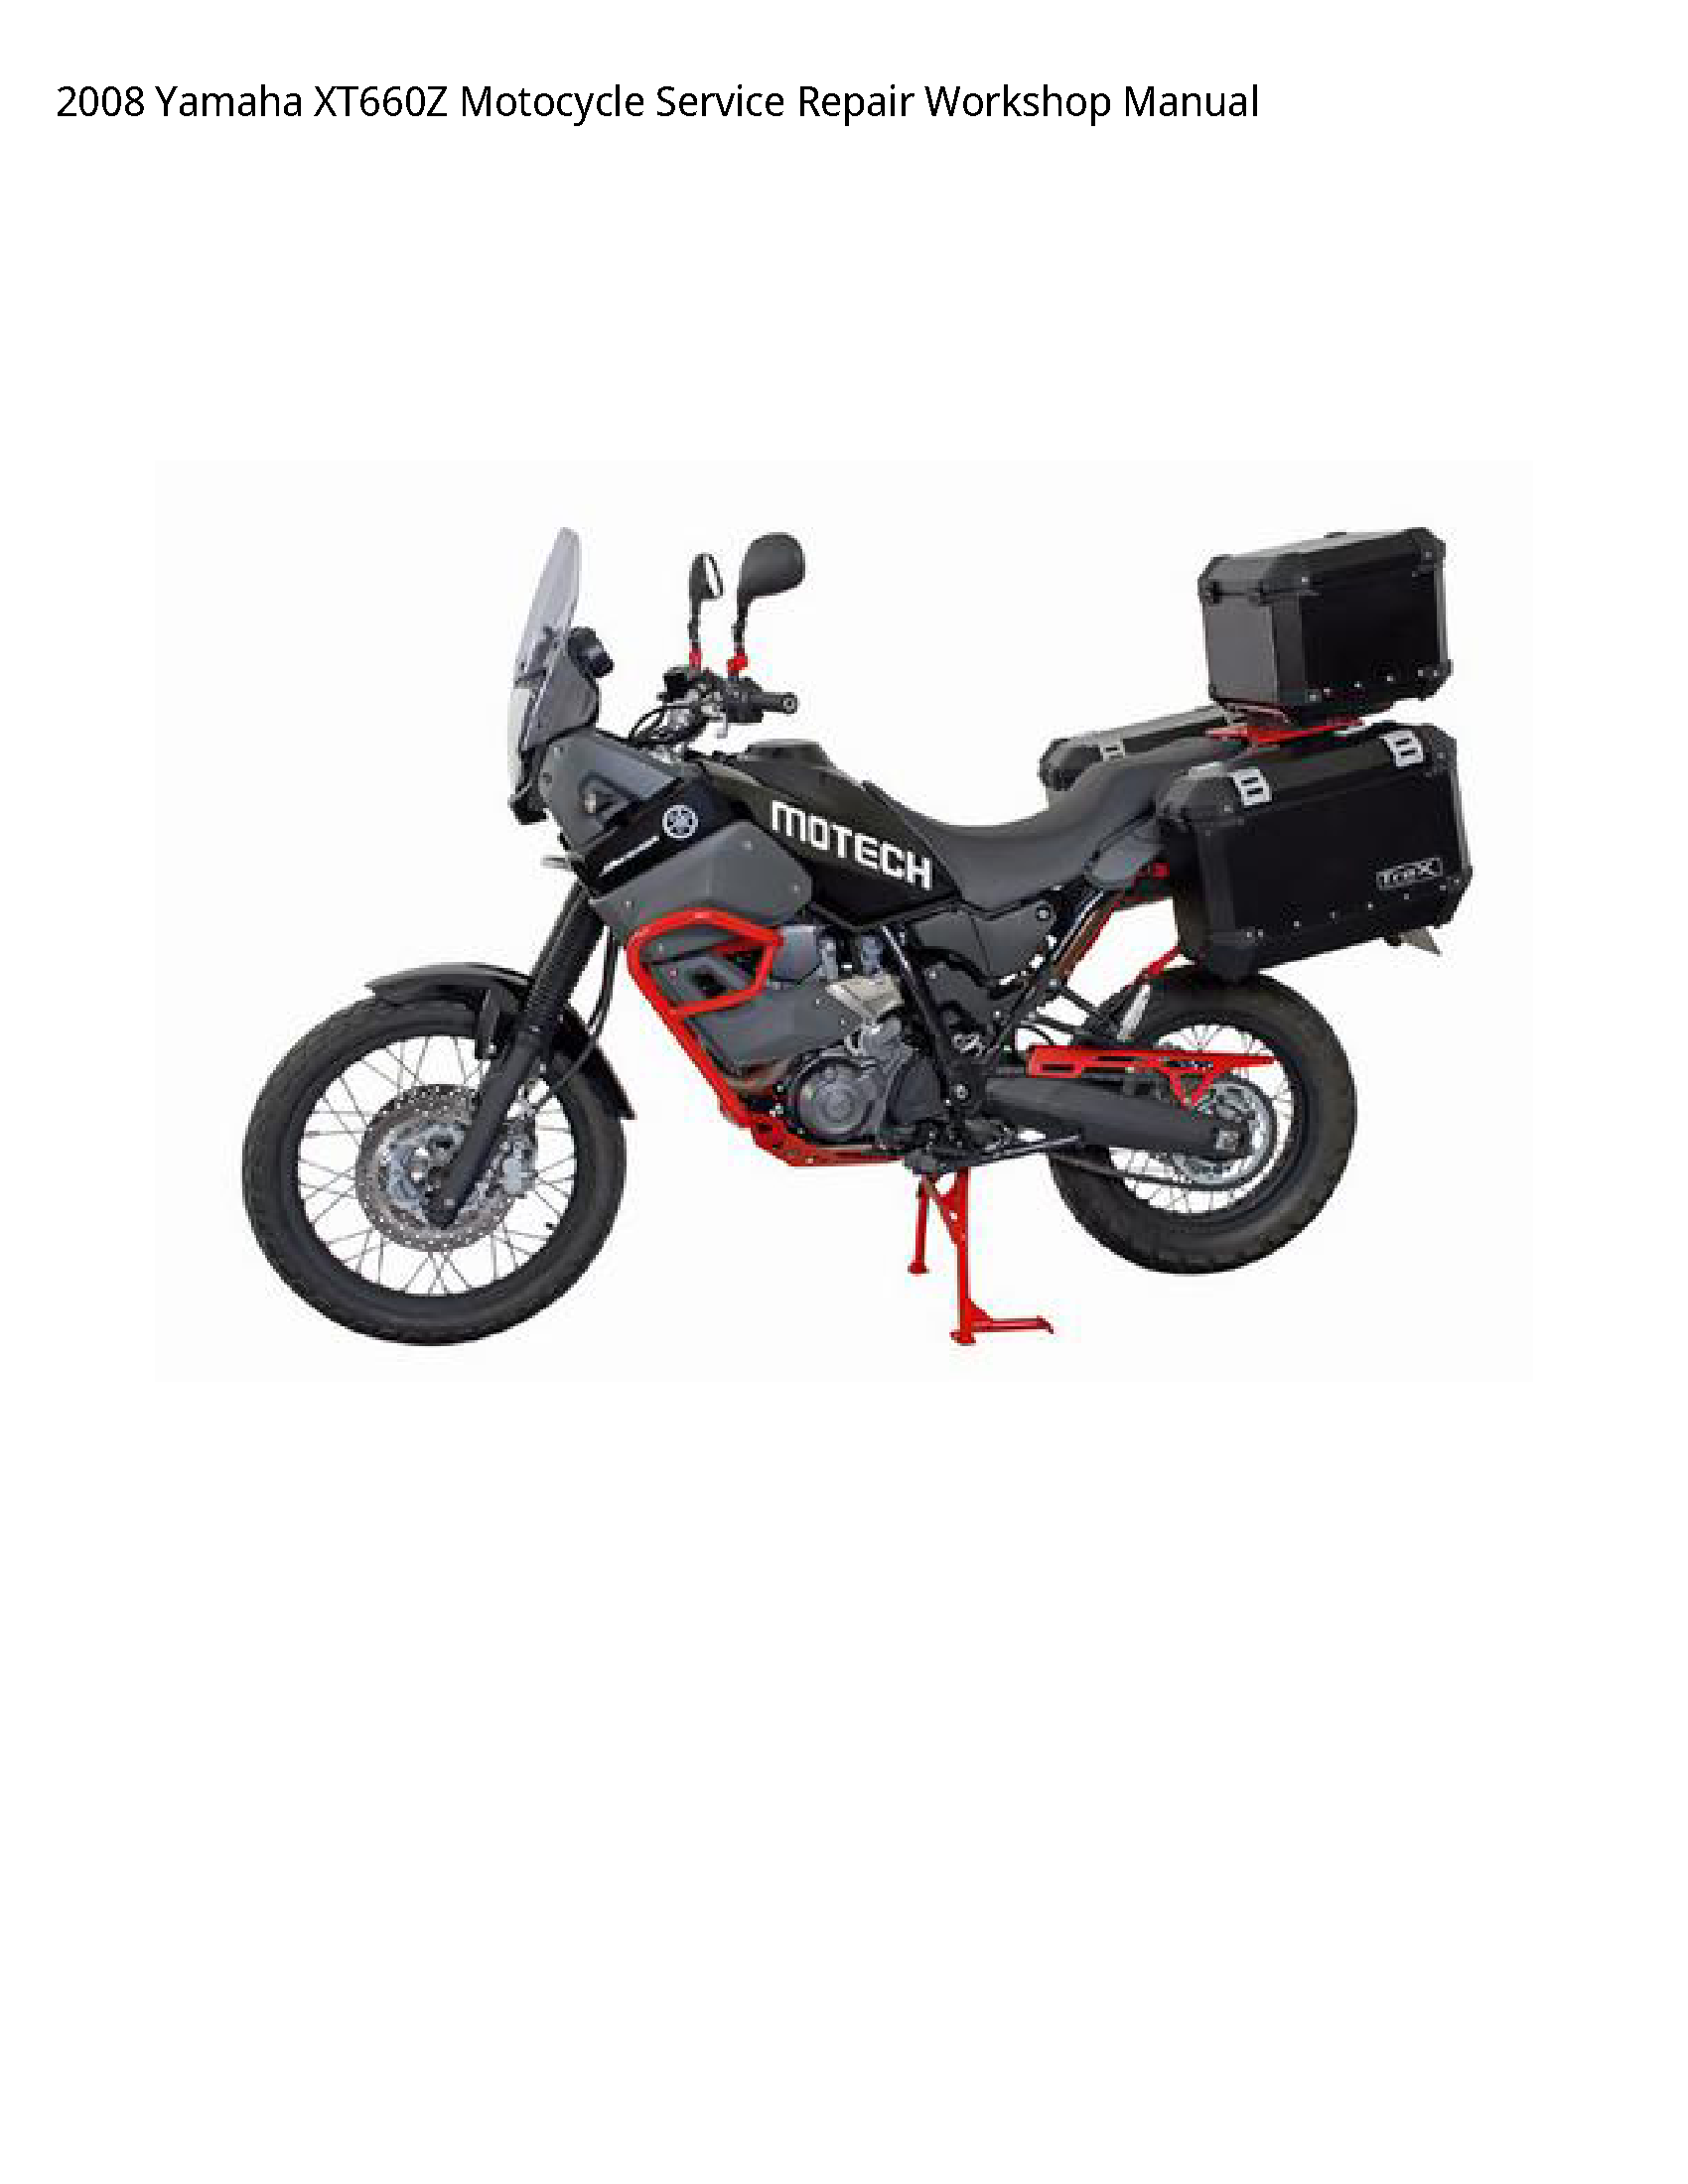 Yamaha XT660Z Motocycle manual